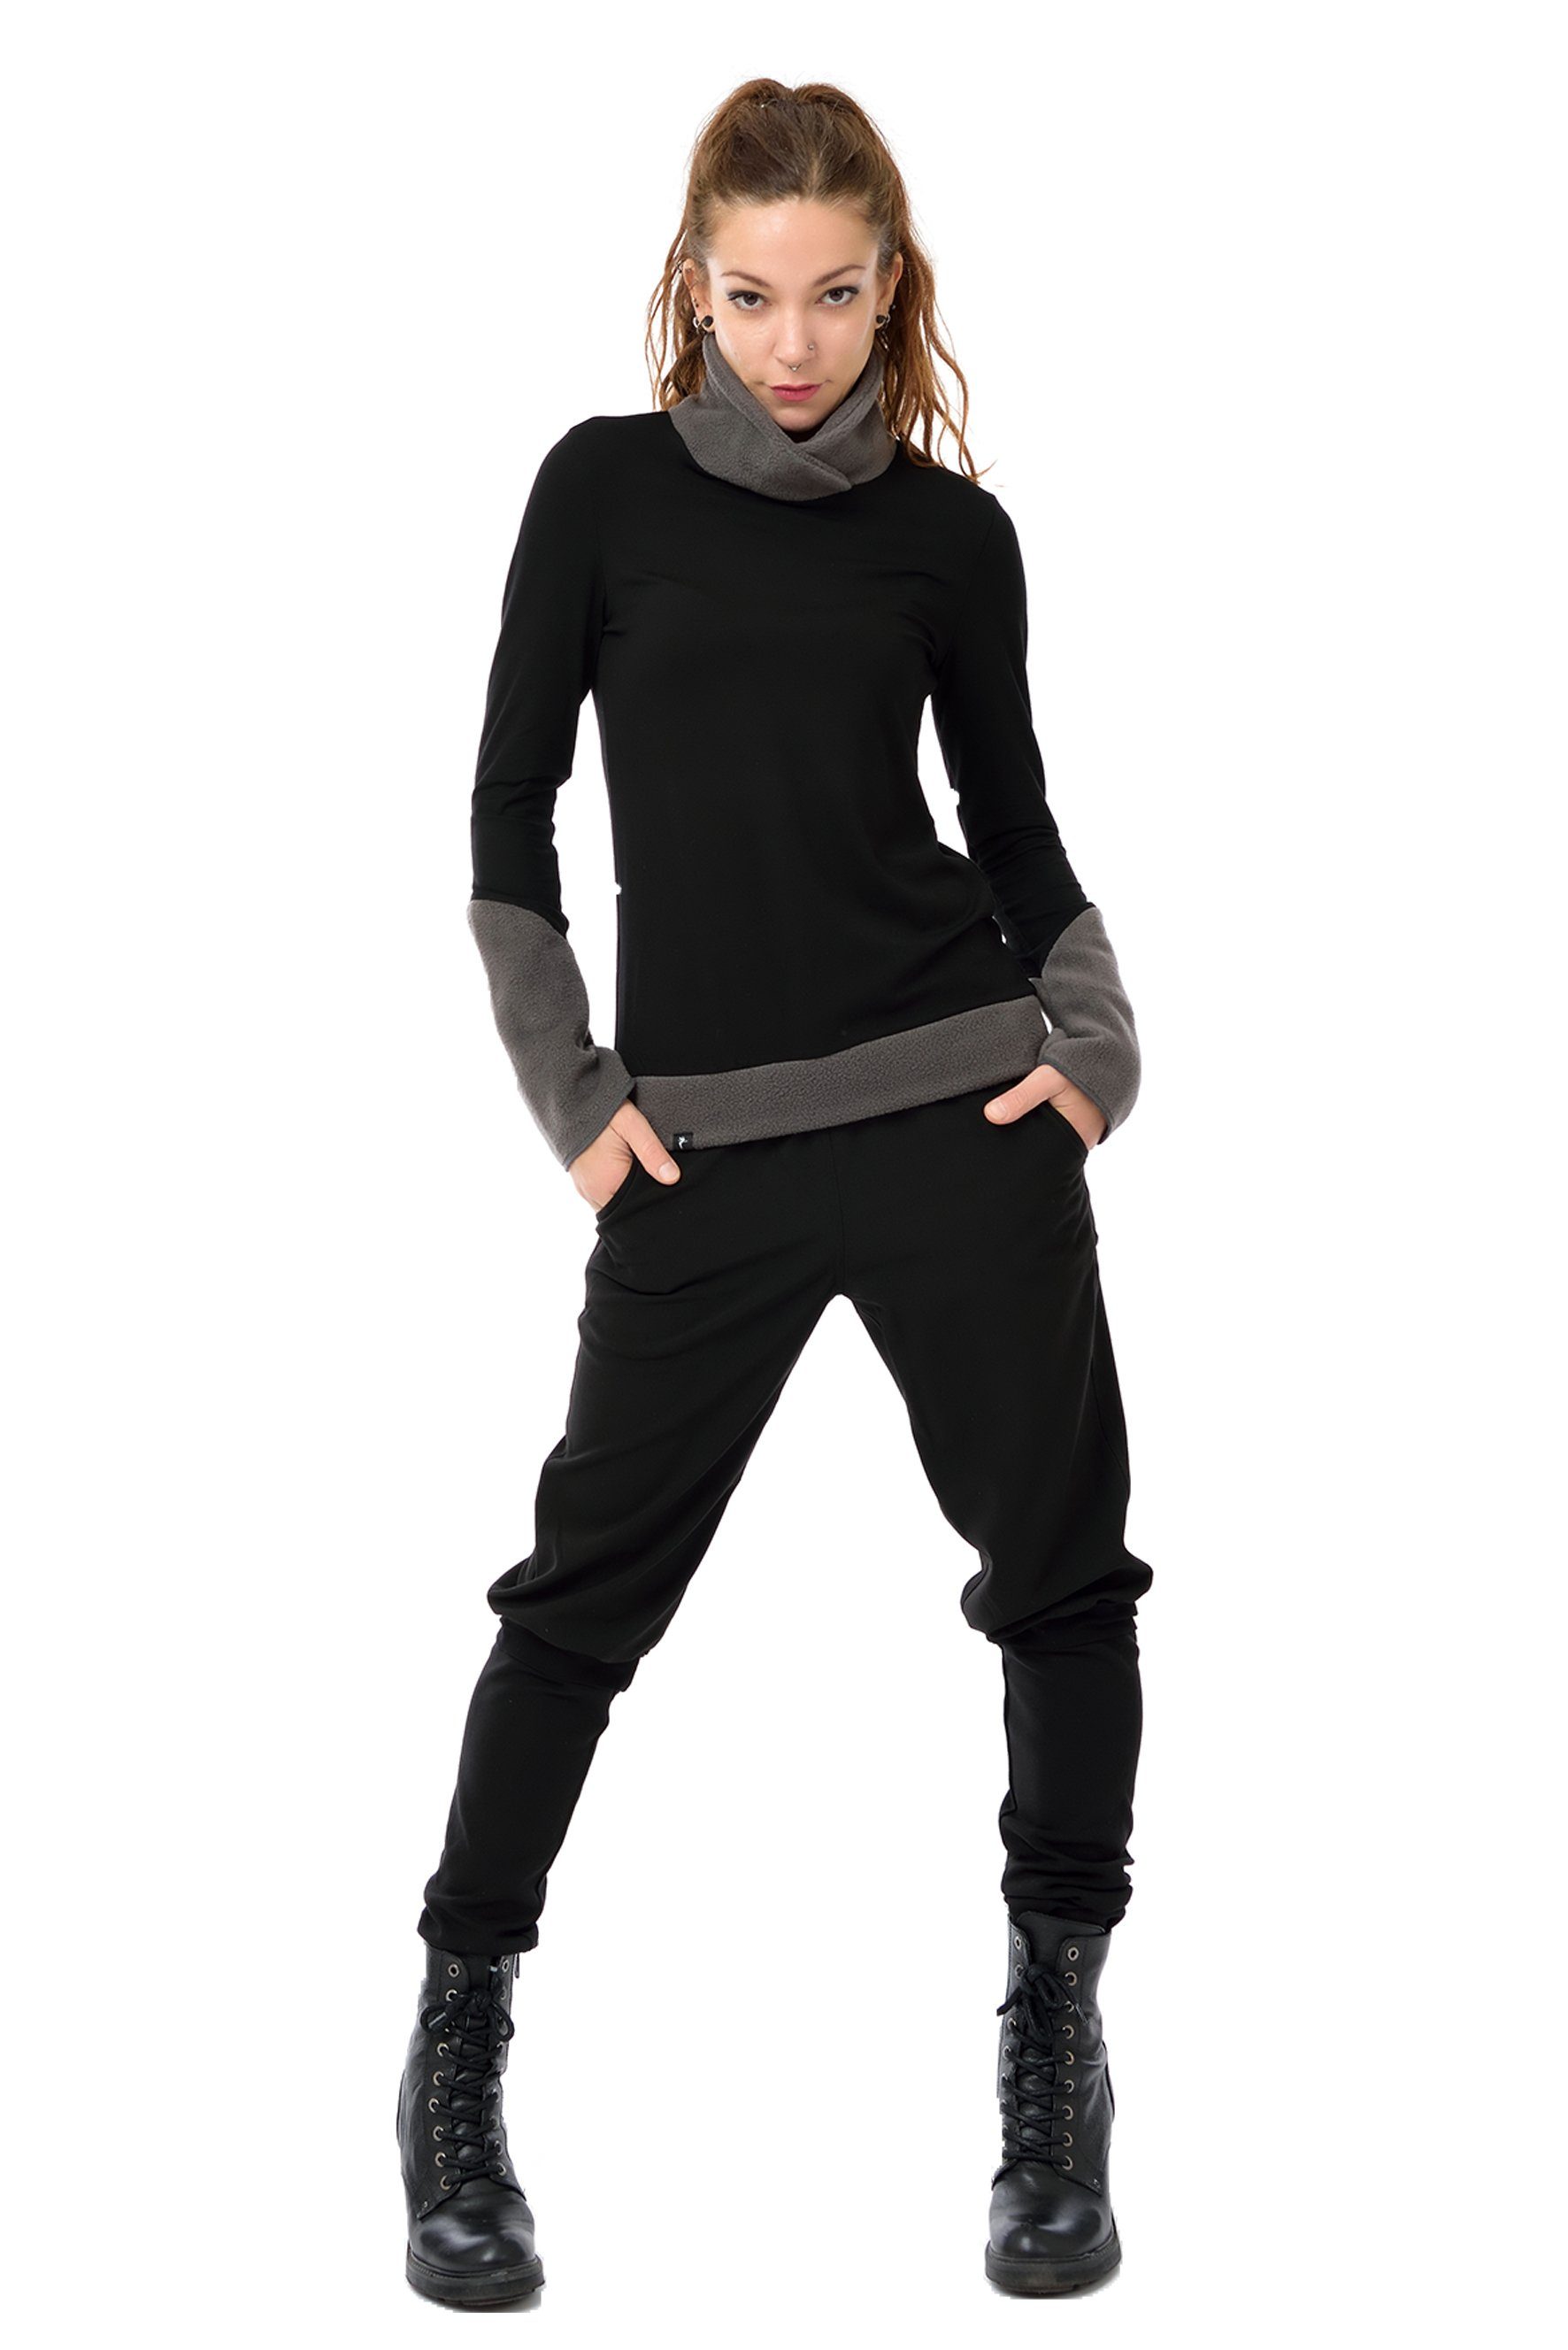 3Elfen Rollkragenpullover Winter Sweatshirt schwarz mit Rollkragen Grau Fleece